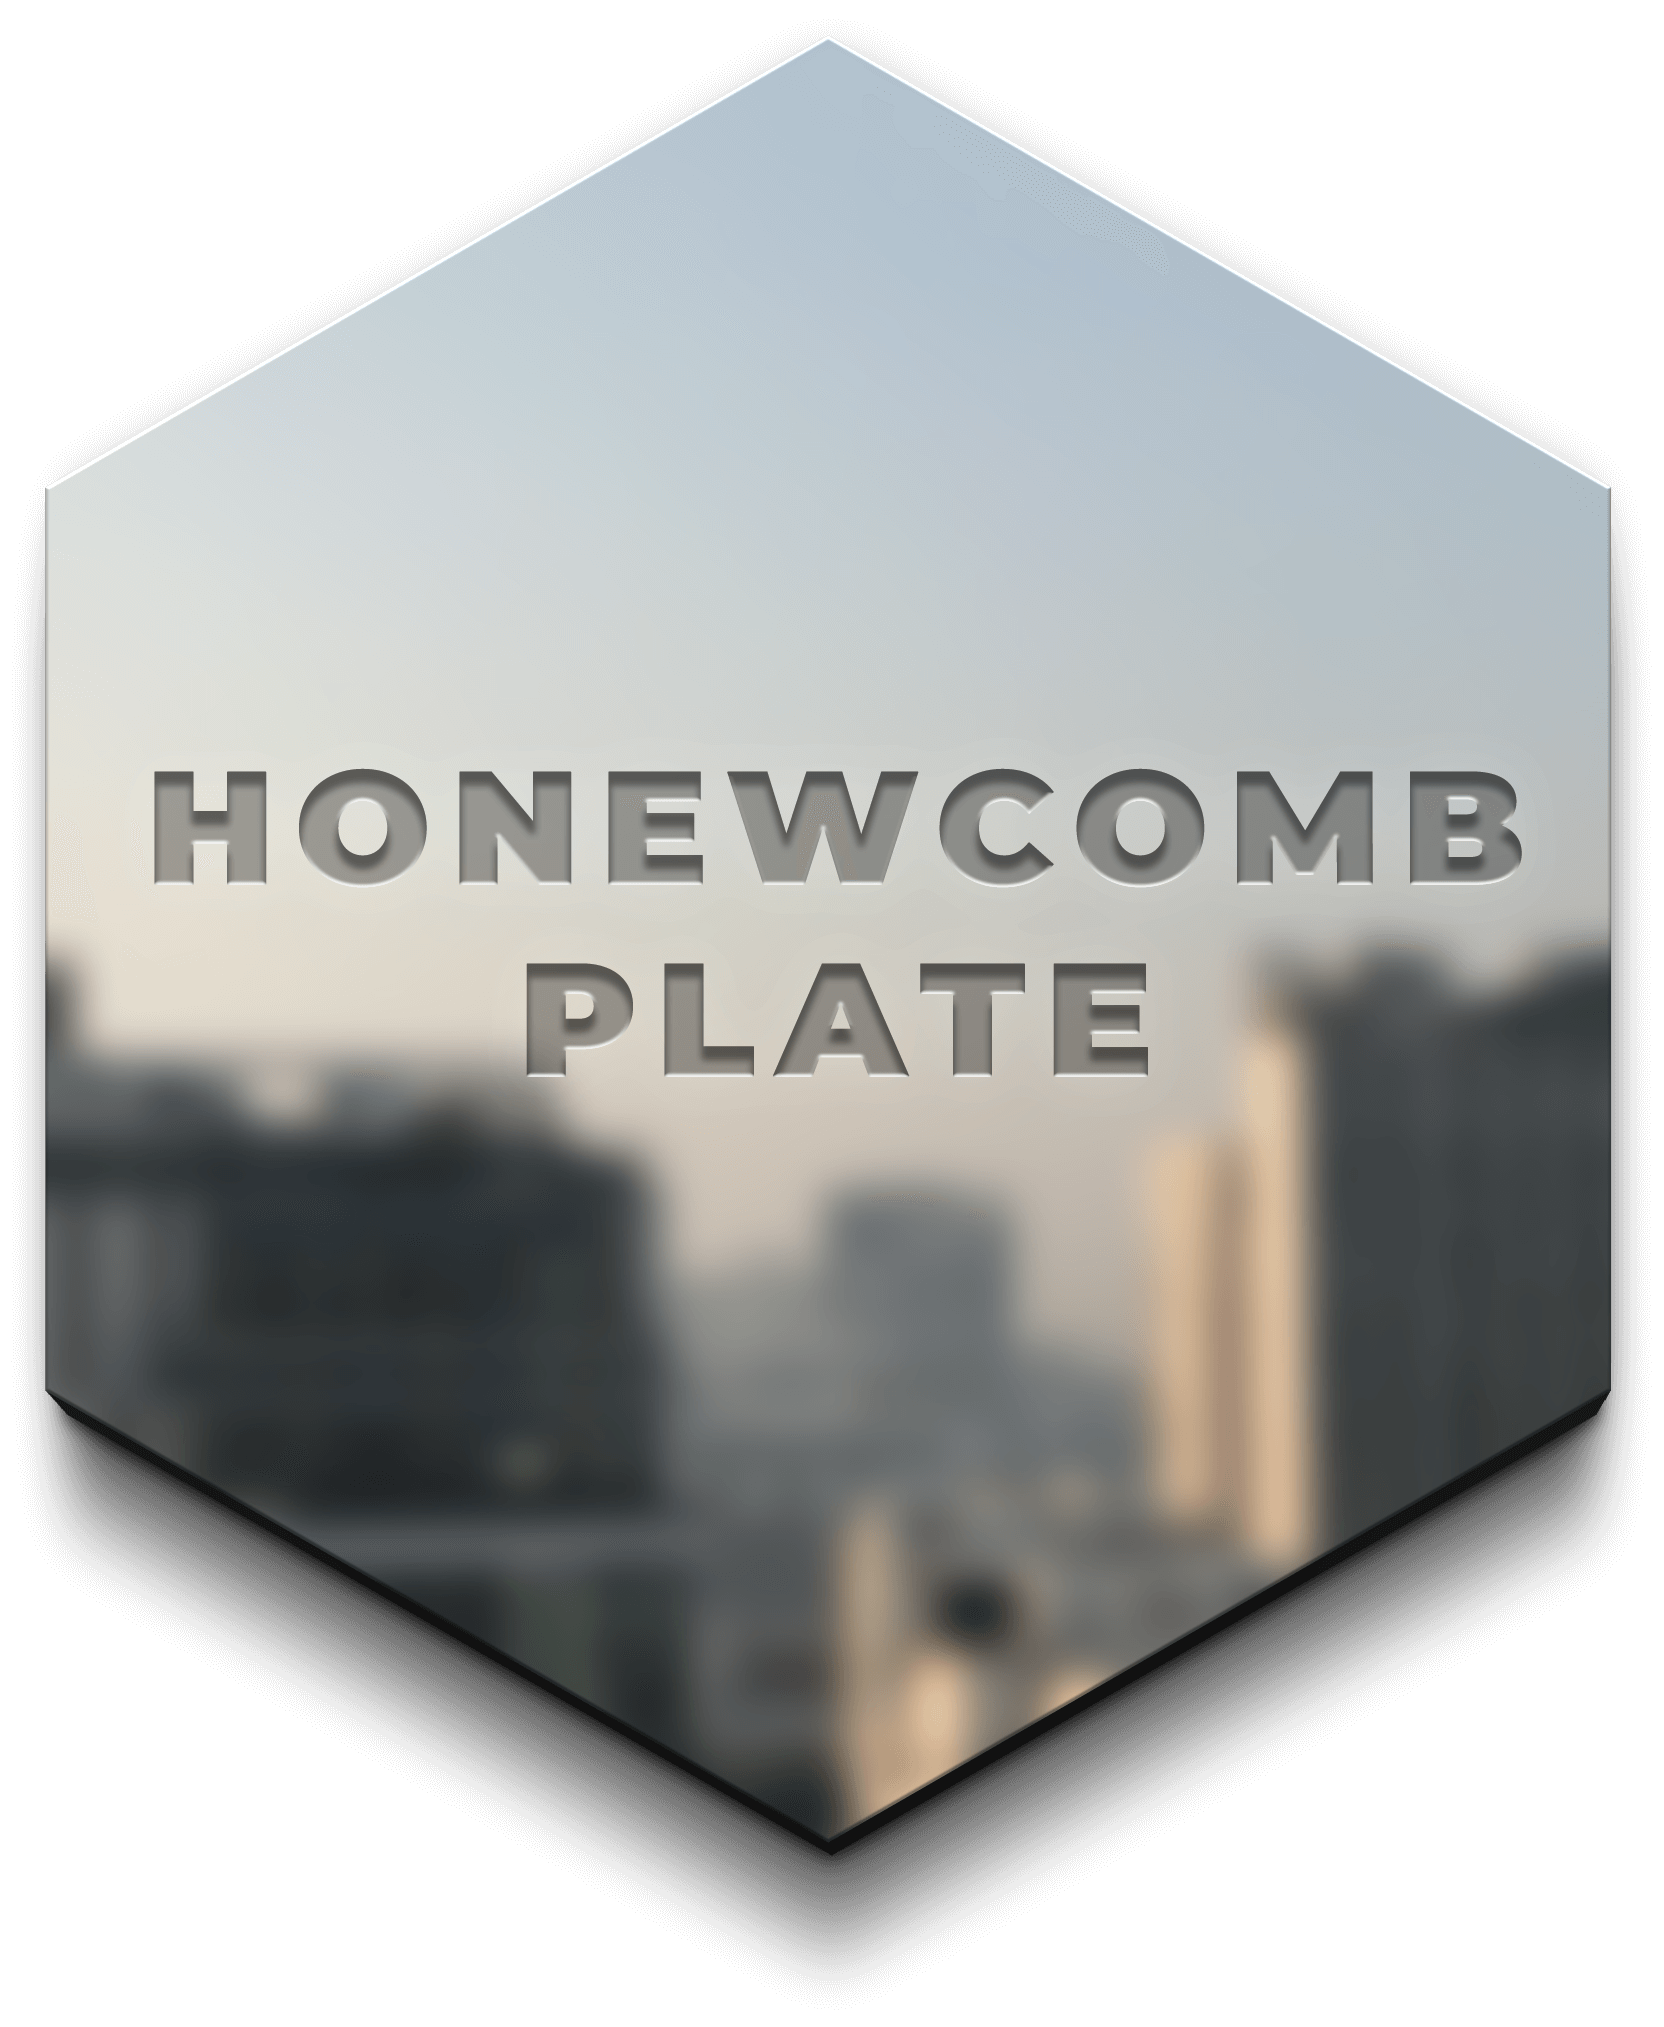 Honewcomb plate